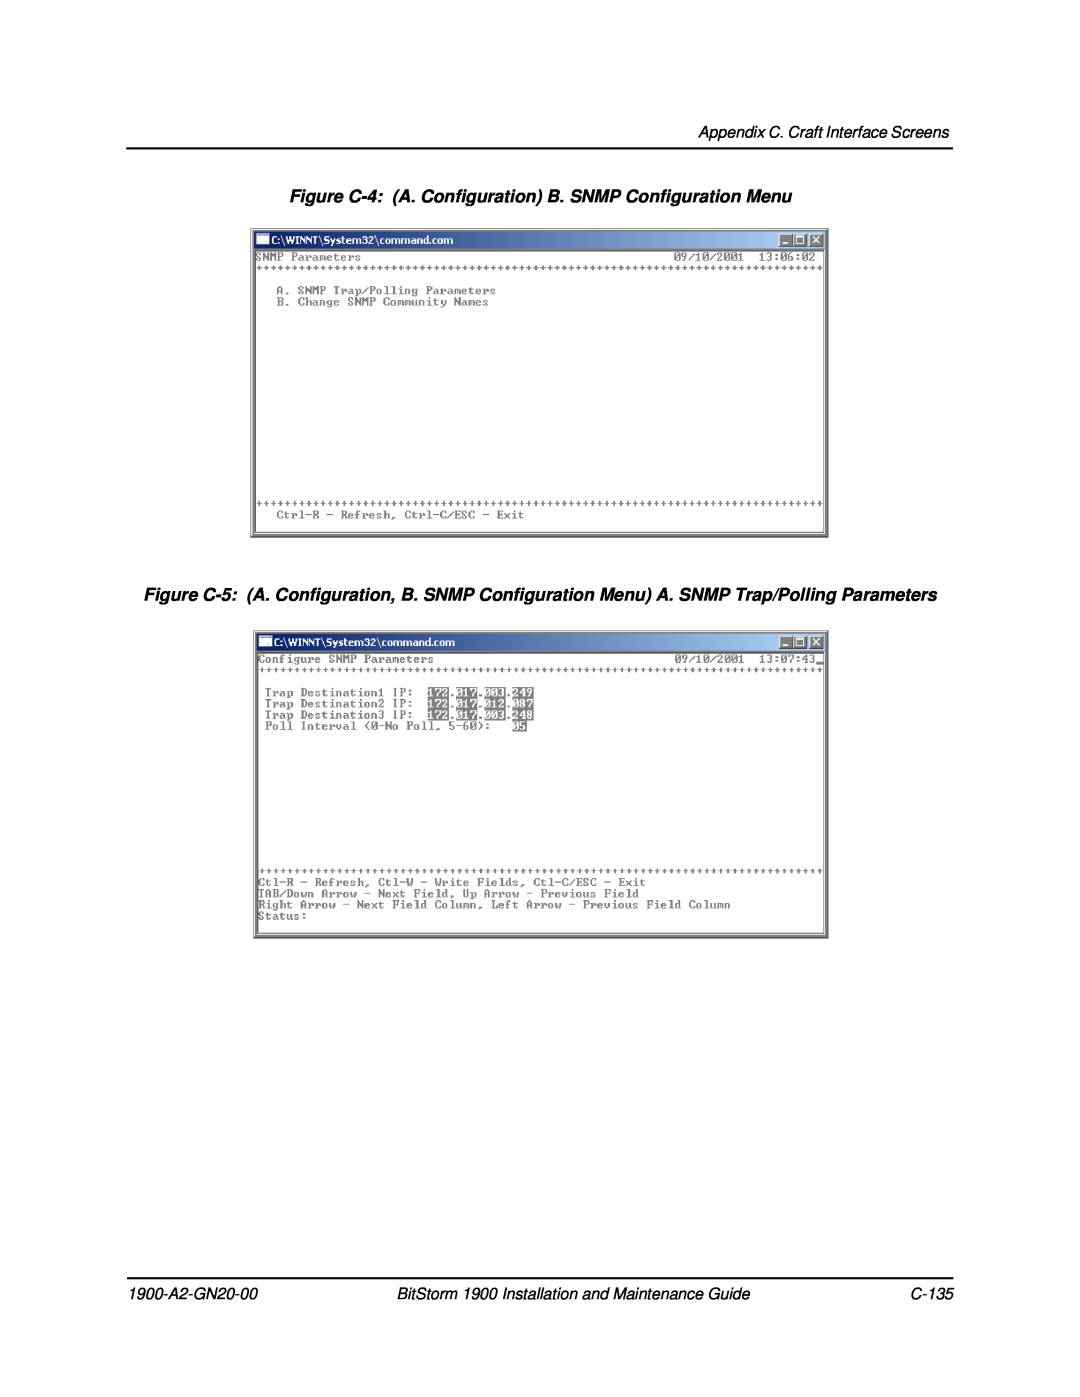 Paradyne Figure C-4 A. Configuration B. SNMP Configuration Menu, Appendix C. Craft Interface Screens, 1900-A2-GN20-00 